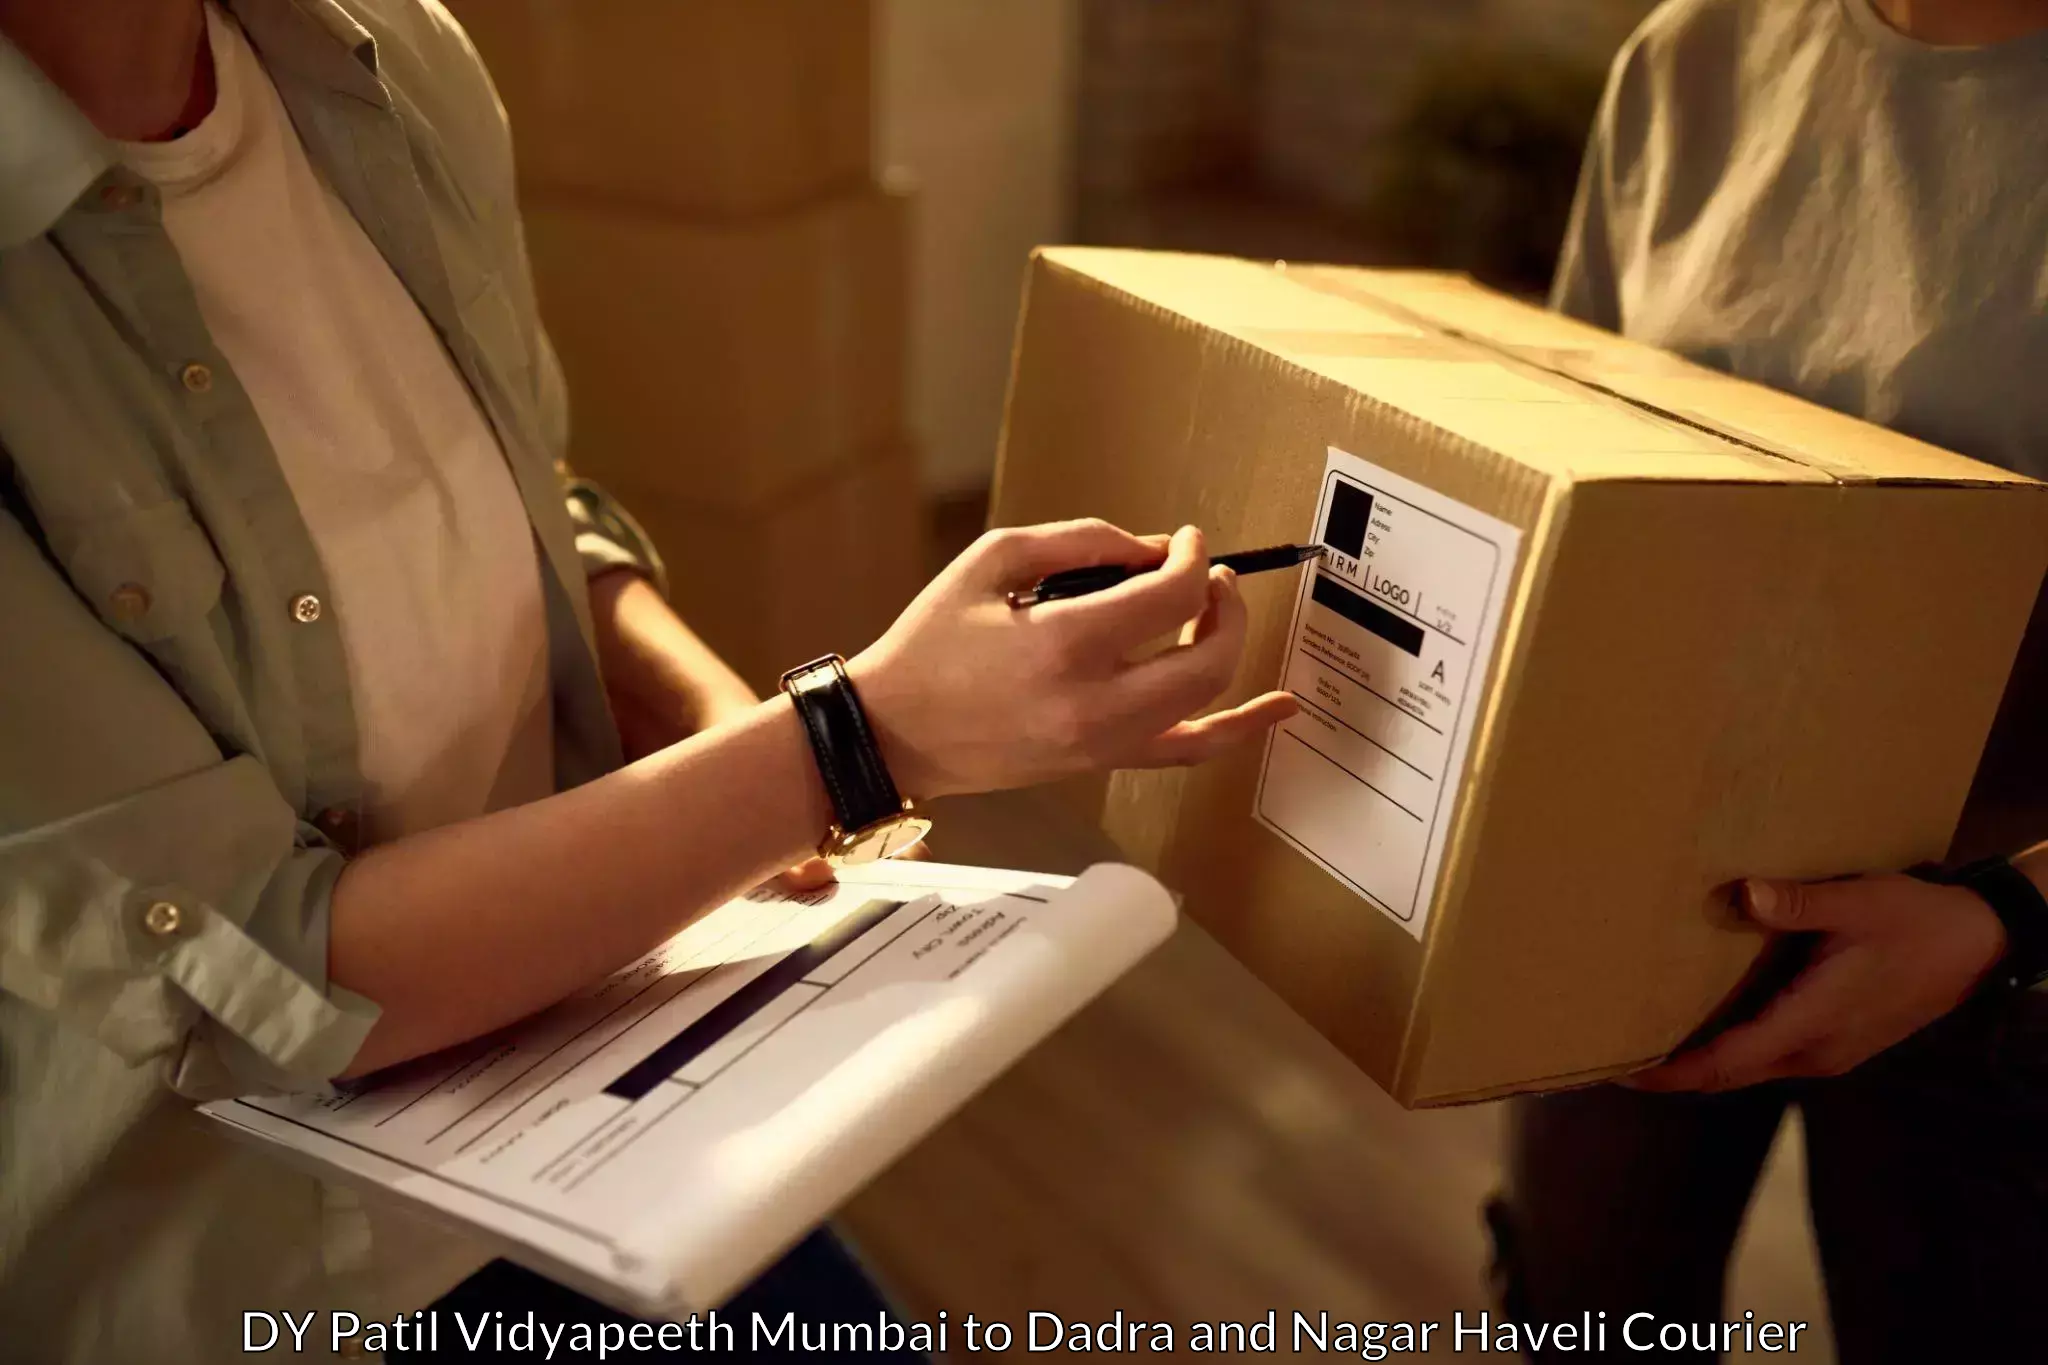 Tech-enabled shipping DY Patil Vidyapeeth Mumbai to Dadra and Nagar Haveli